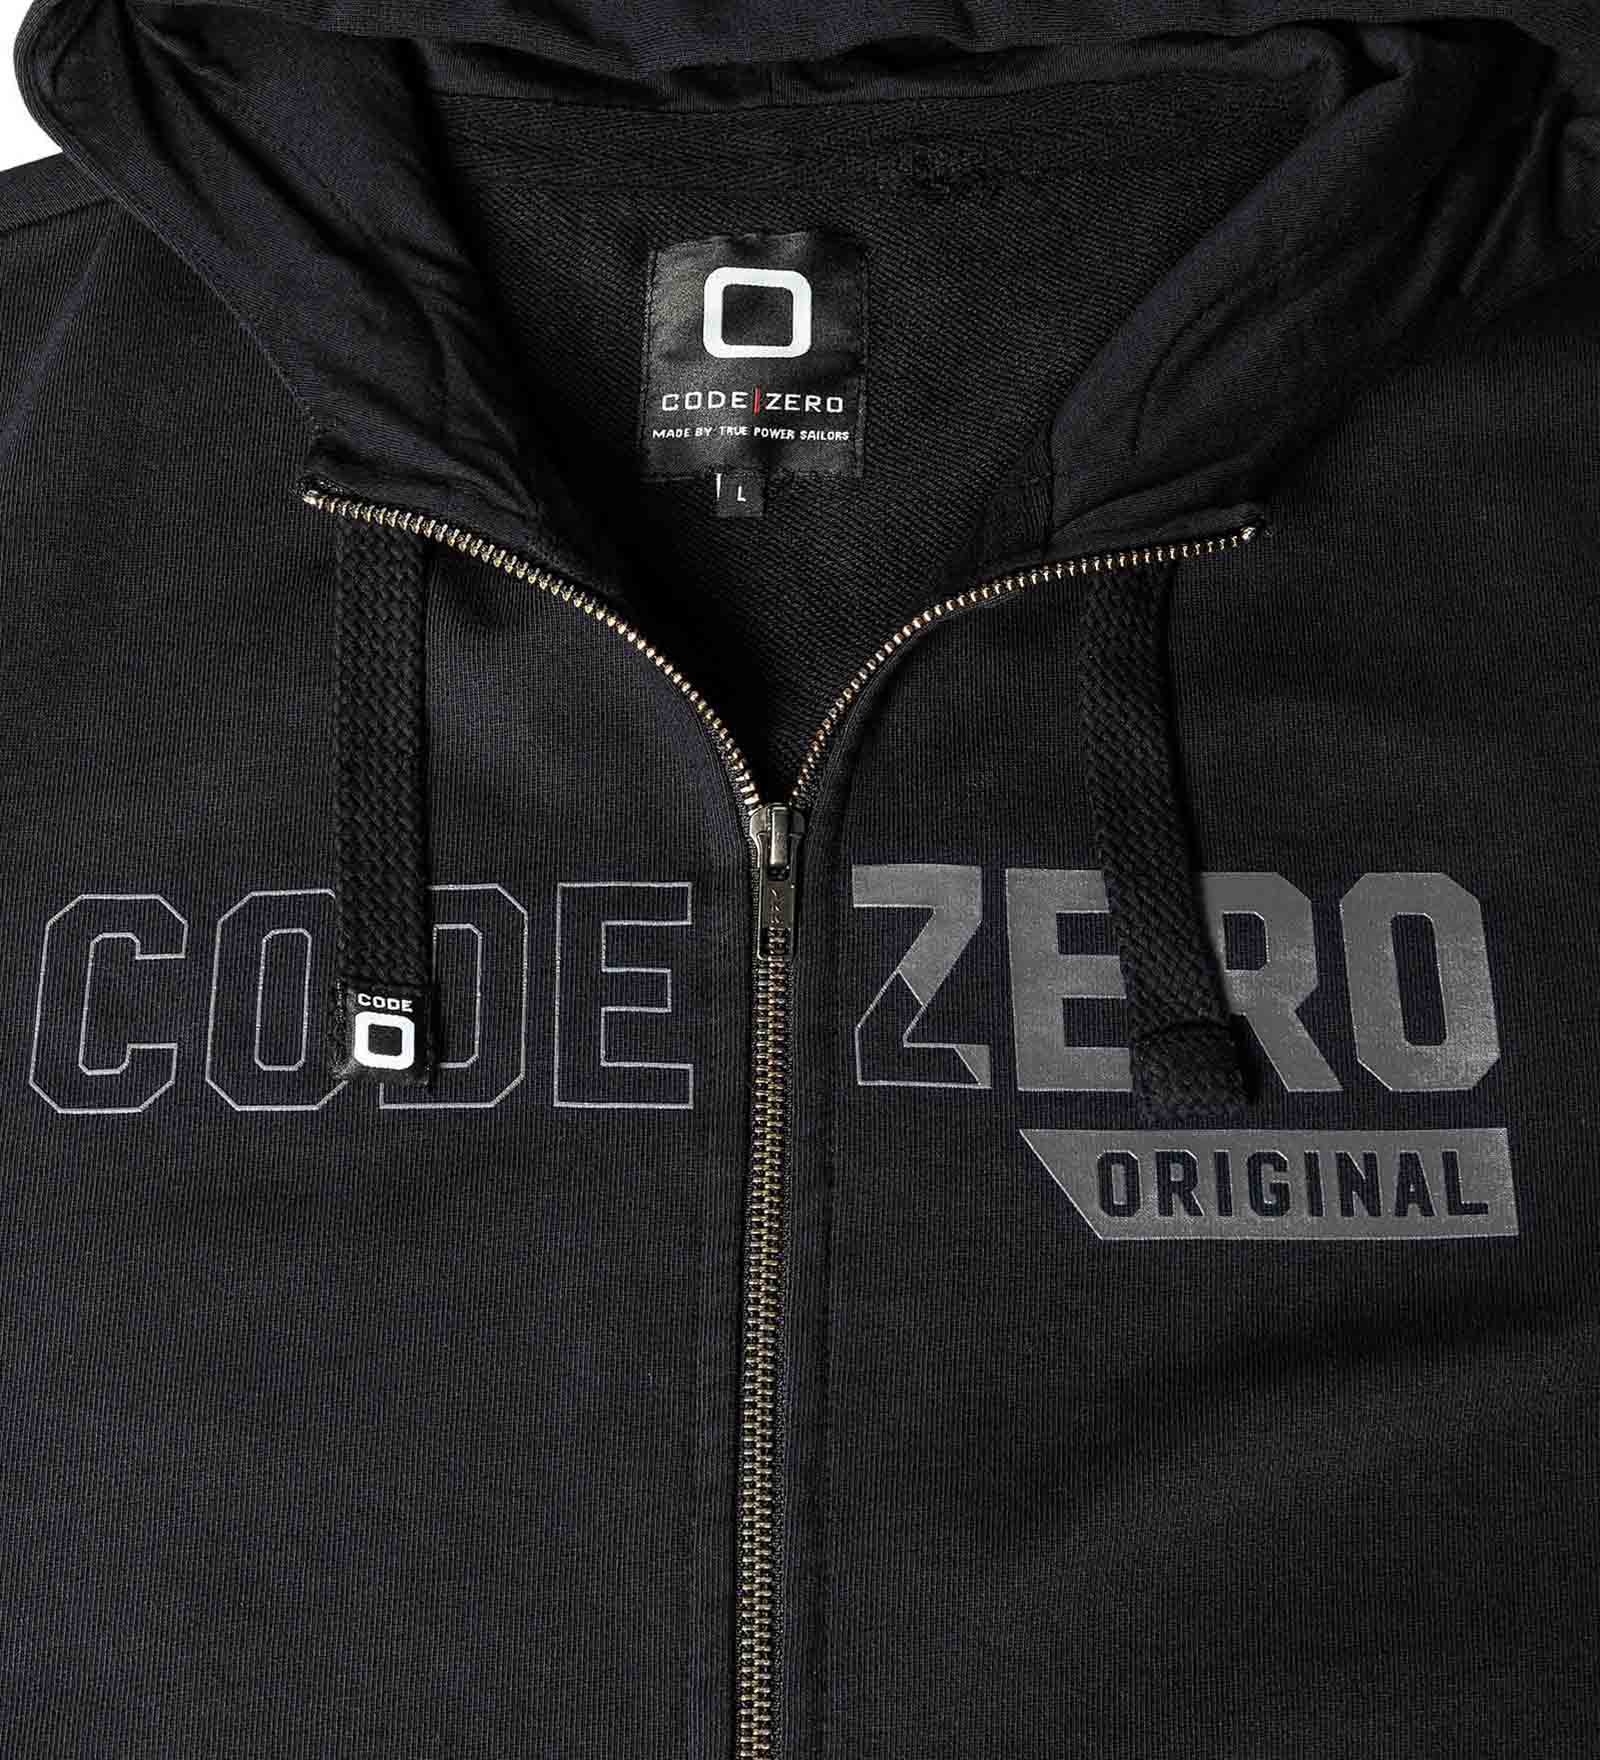 Grey logo and a zip